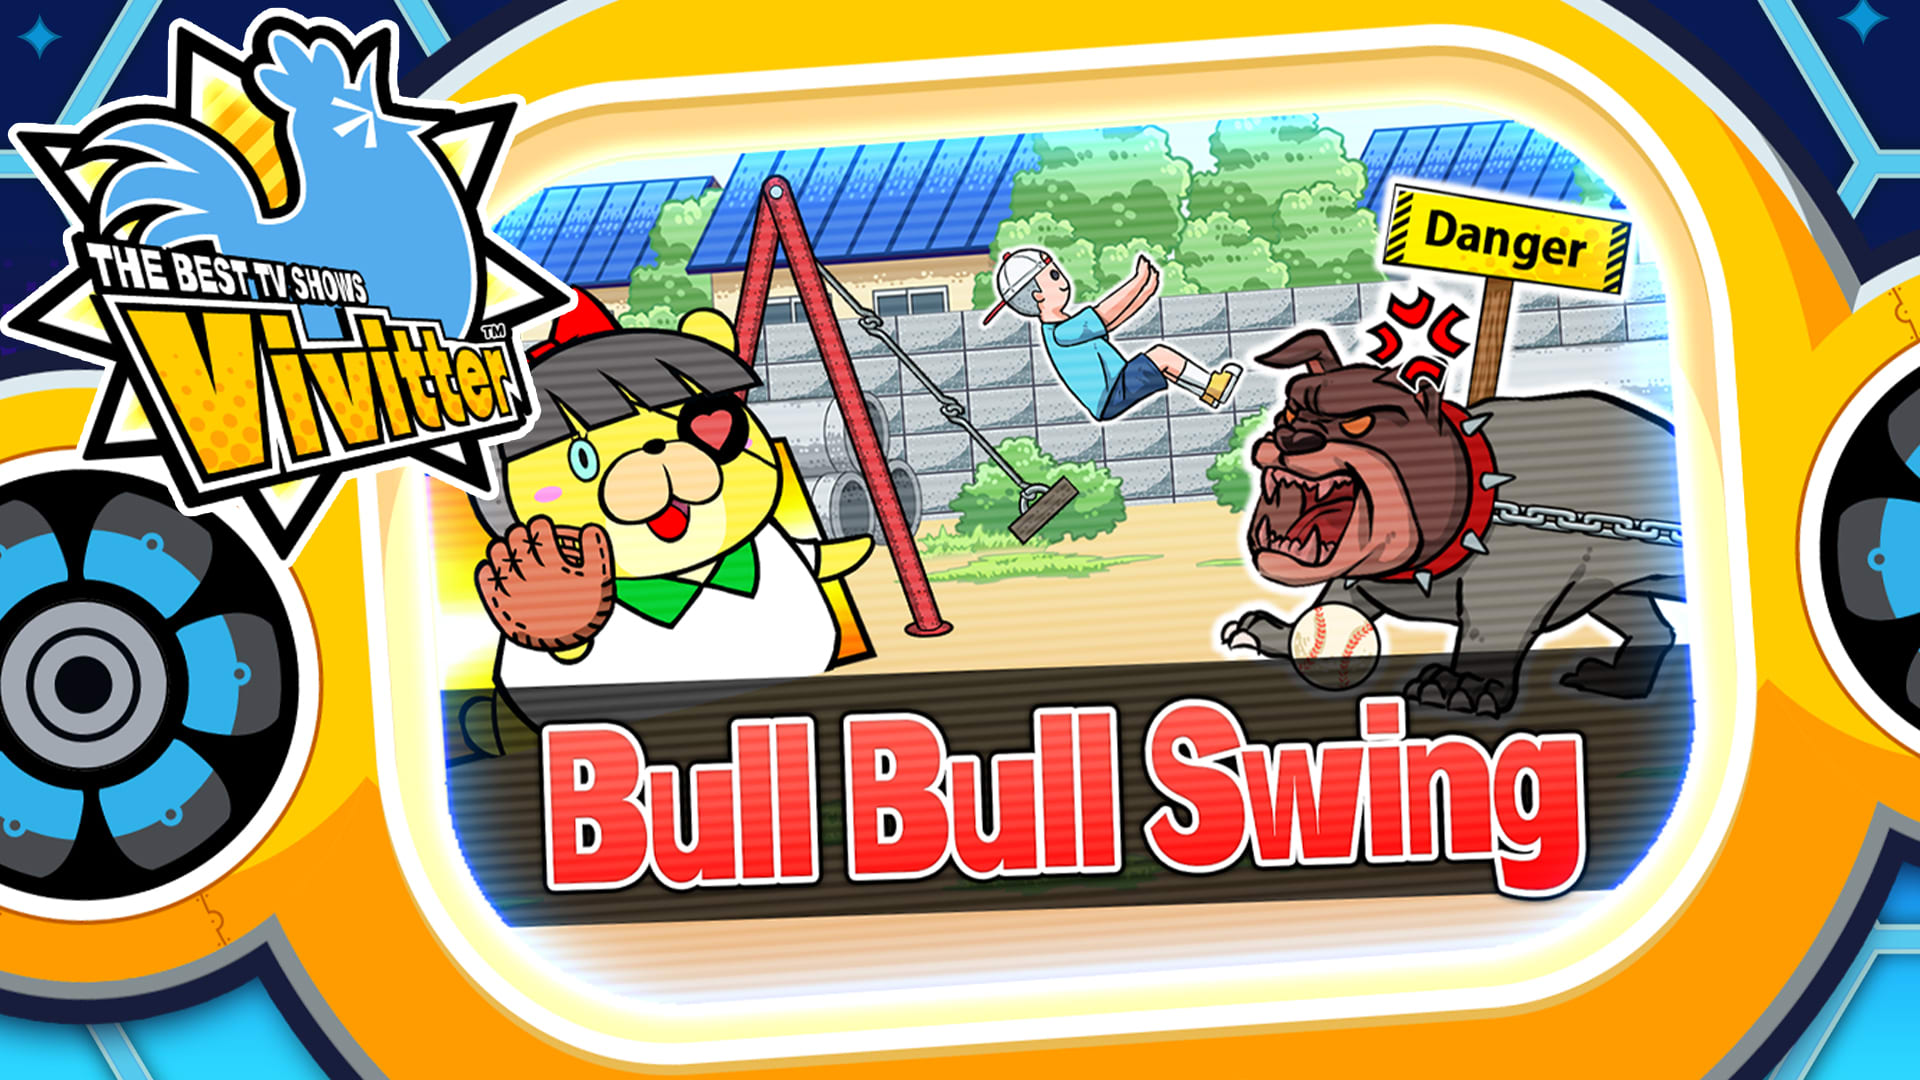 Additional mini-game "Bull Bull Swing"